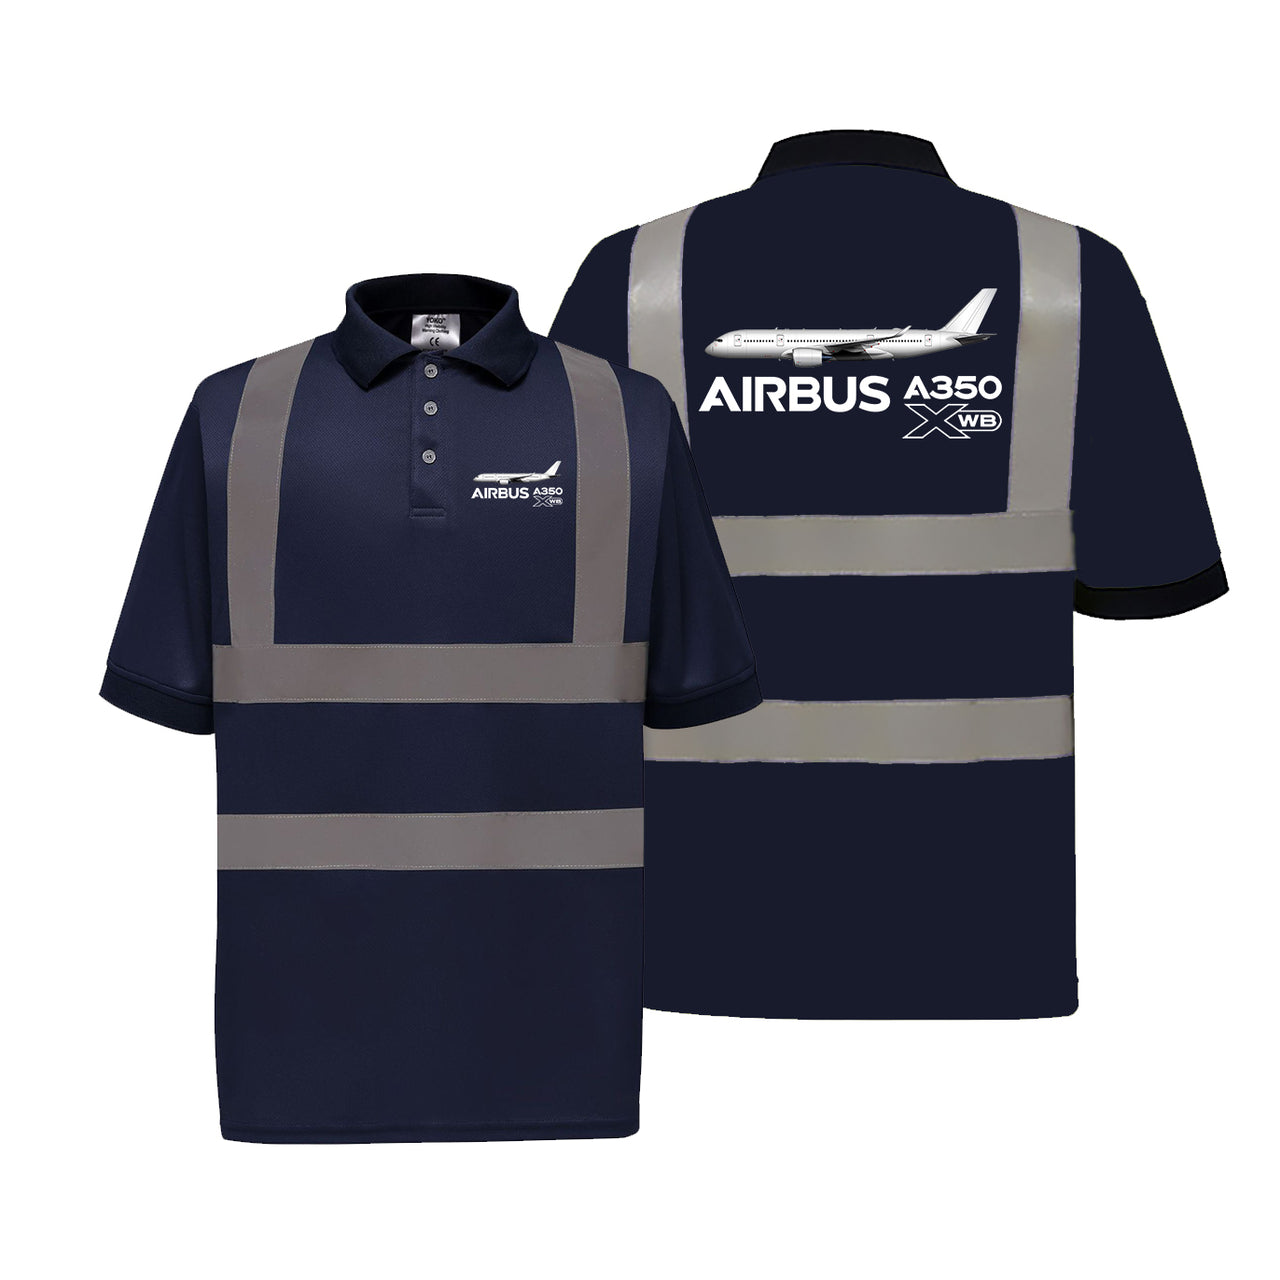 The Airbus A350 WXB Designed Reflective Polo T-Shirts